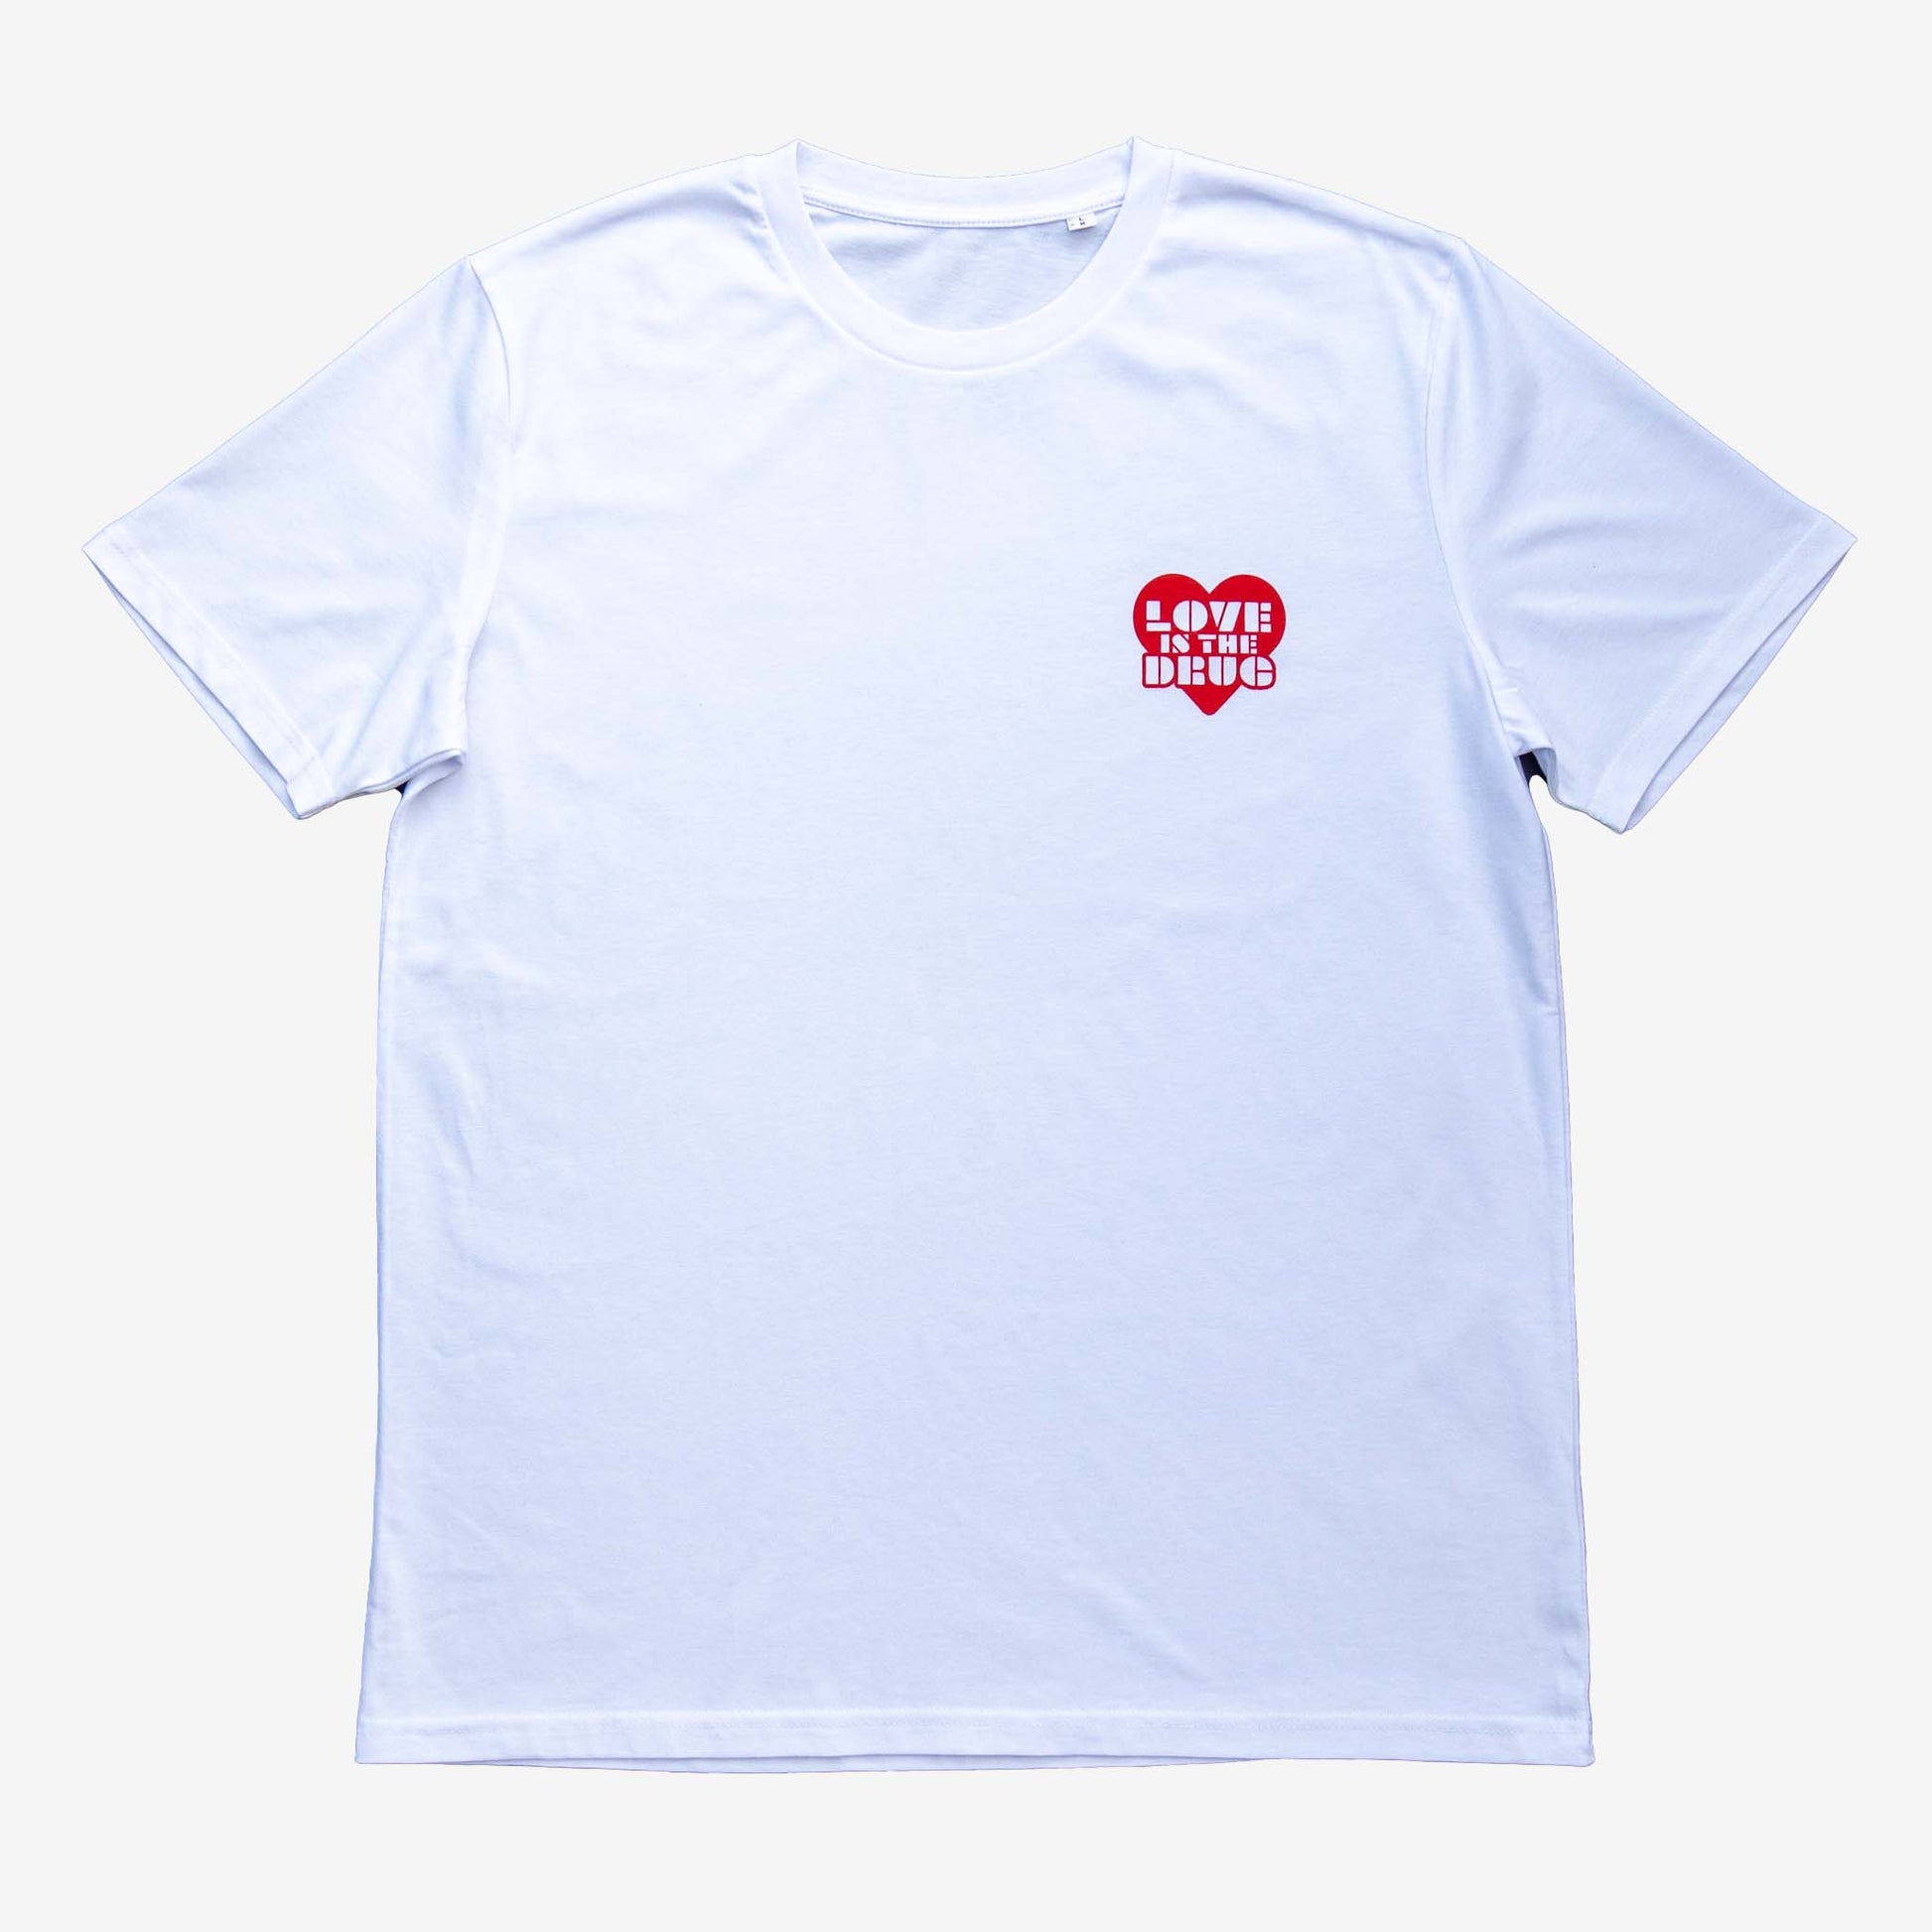 Love is the drug white tshirt